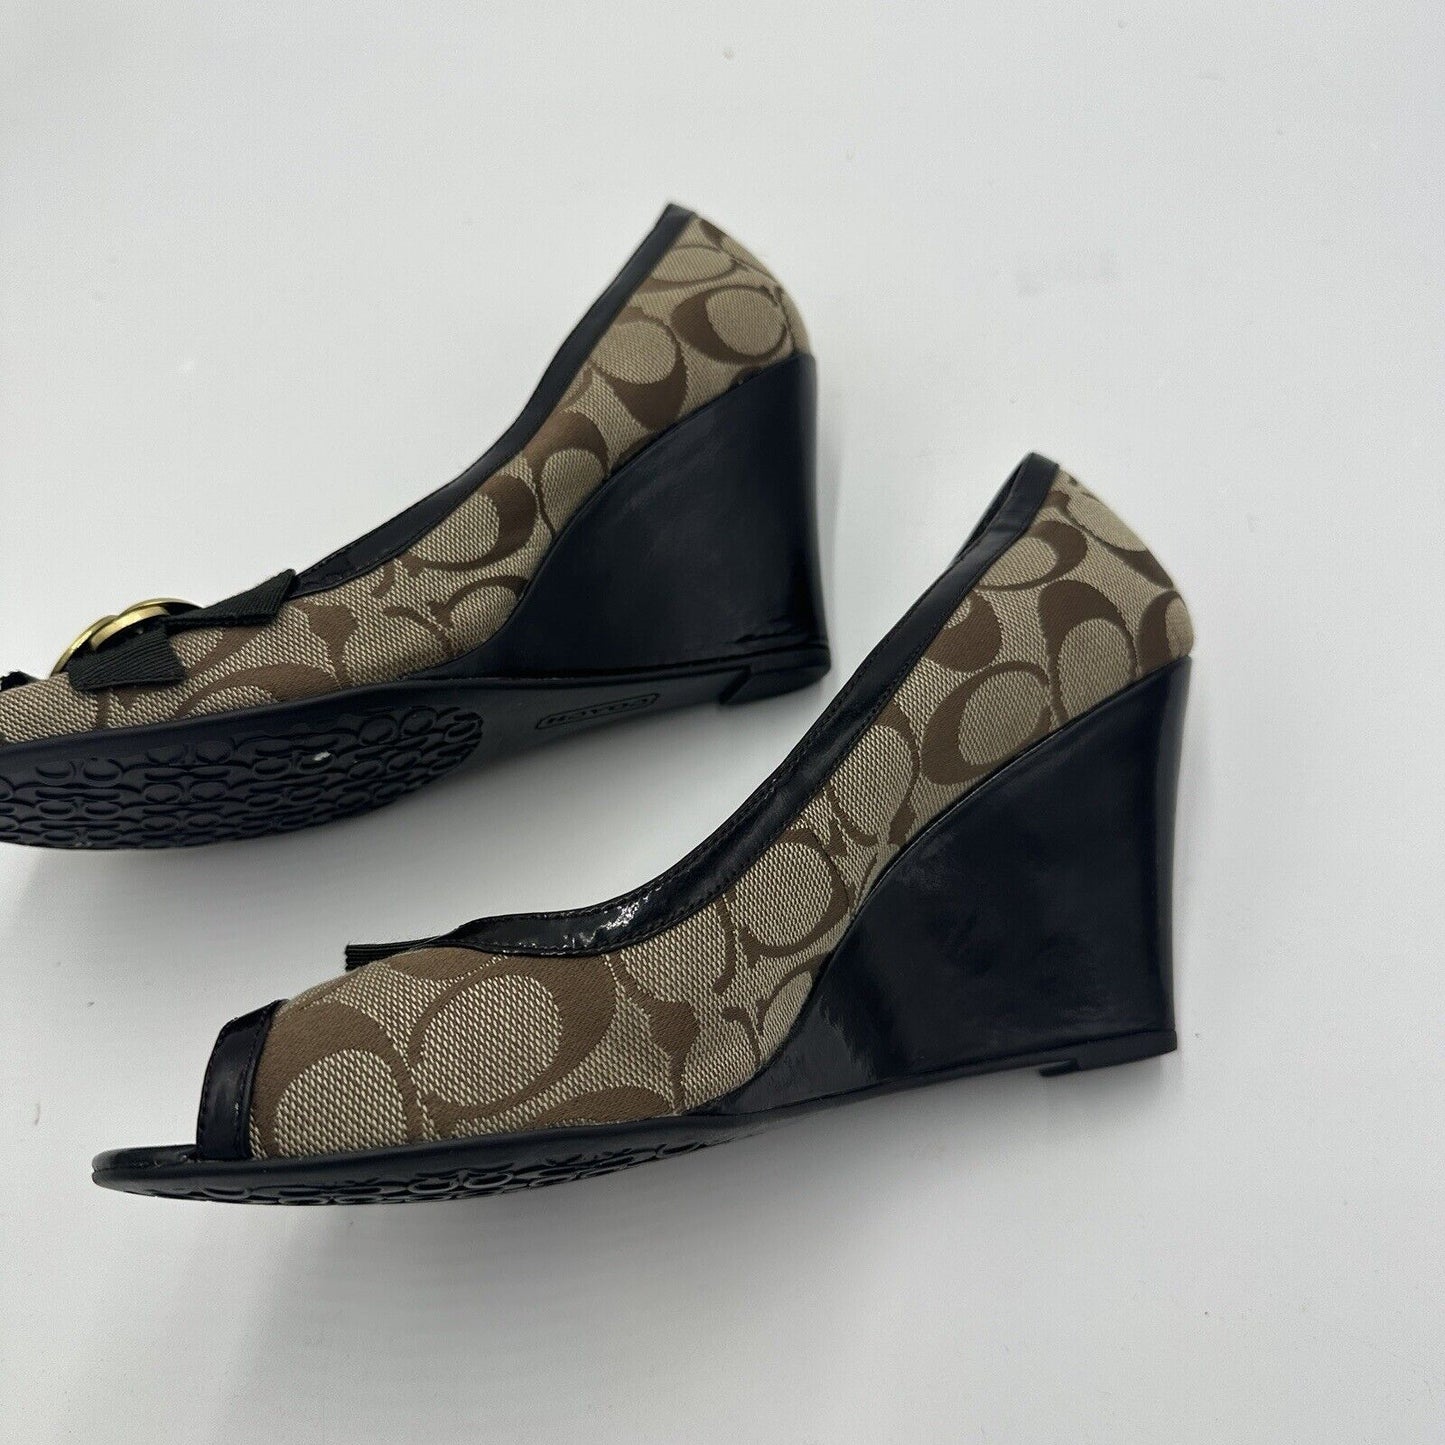 Coach Women's Peep Toe Wedge Heels Shoes Size 9B Black Beige Brown W/Bow Accent